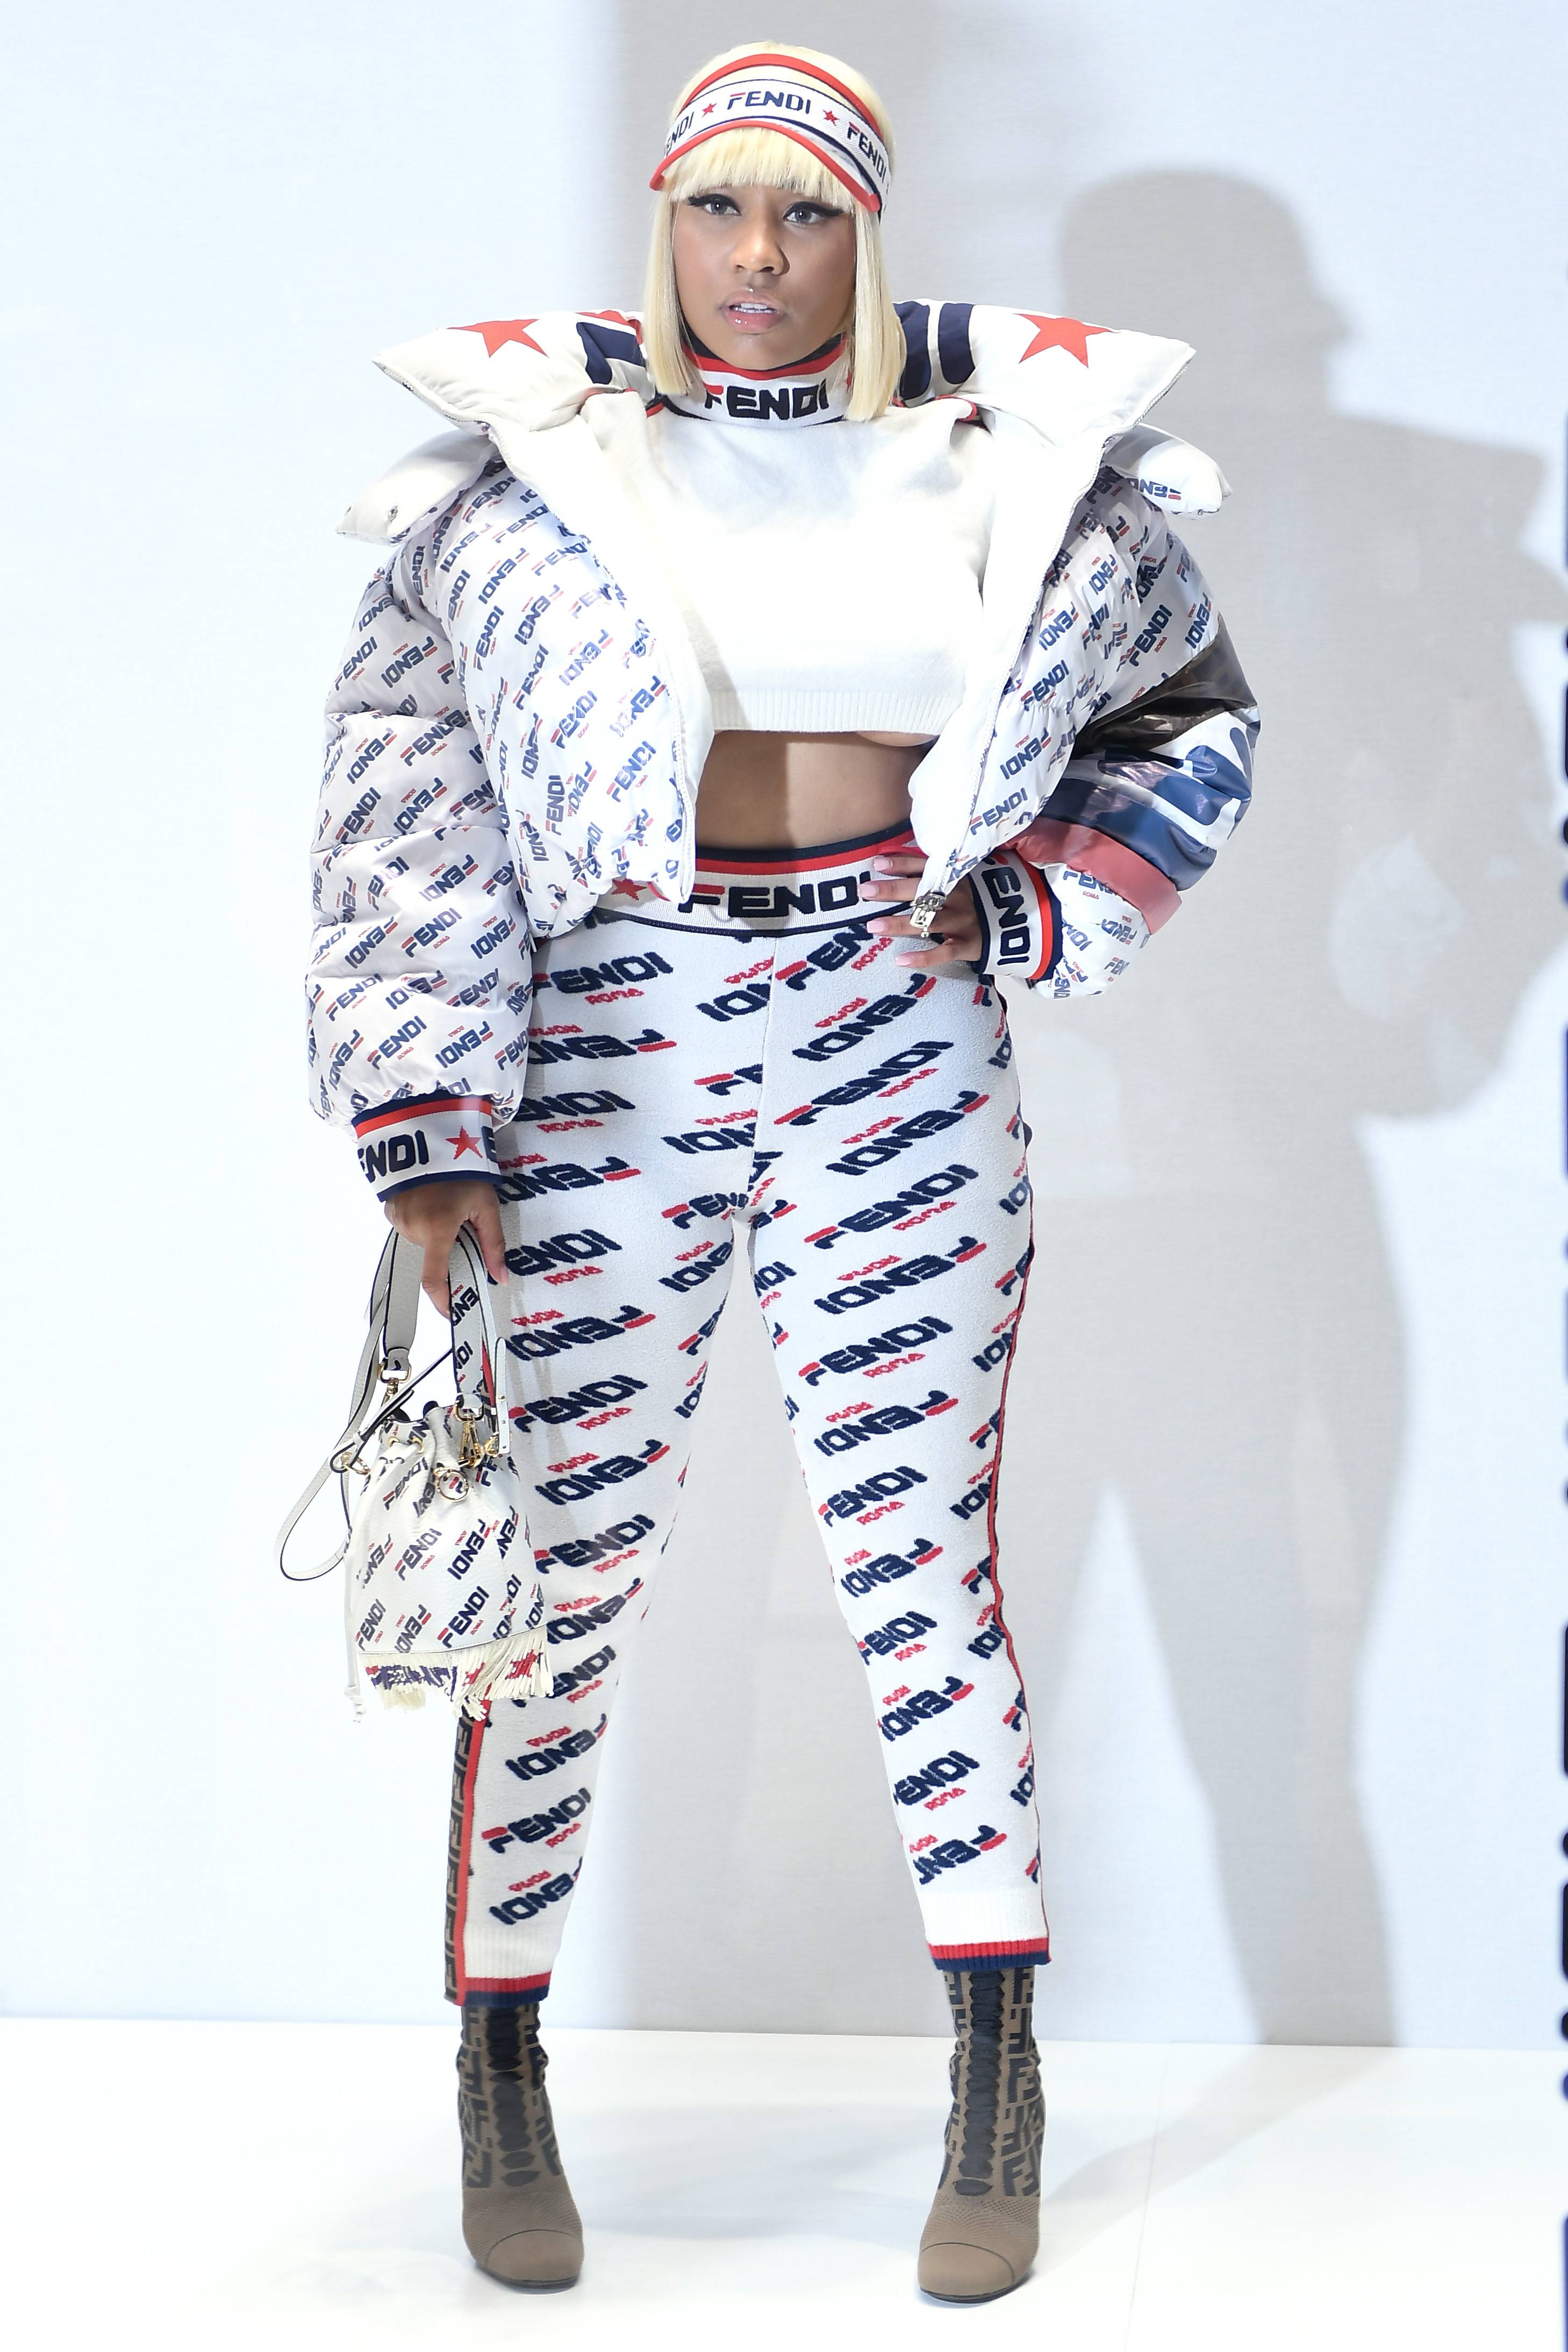 Fendi Prints On Capsule Collection in collaboration with Nicki Minaj